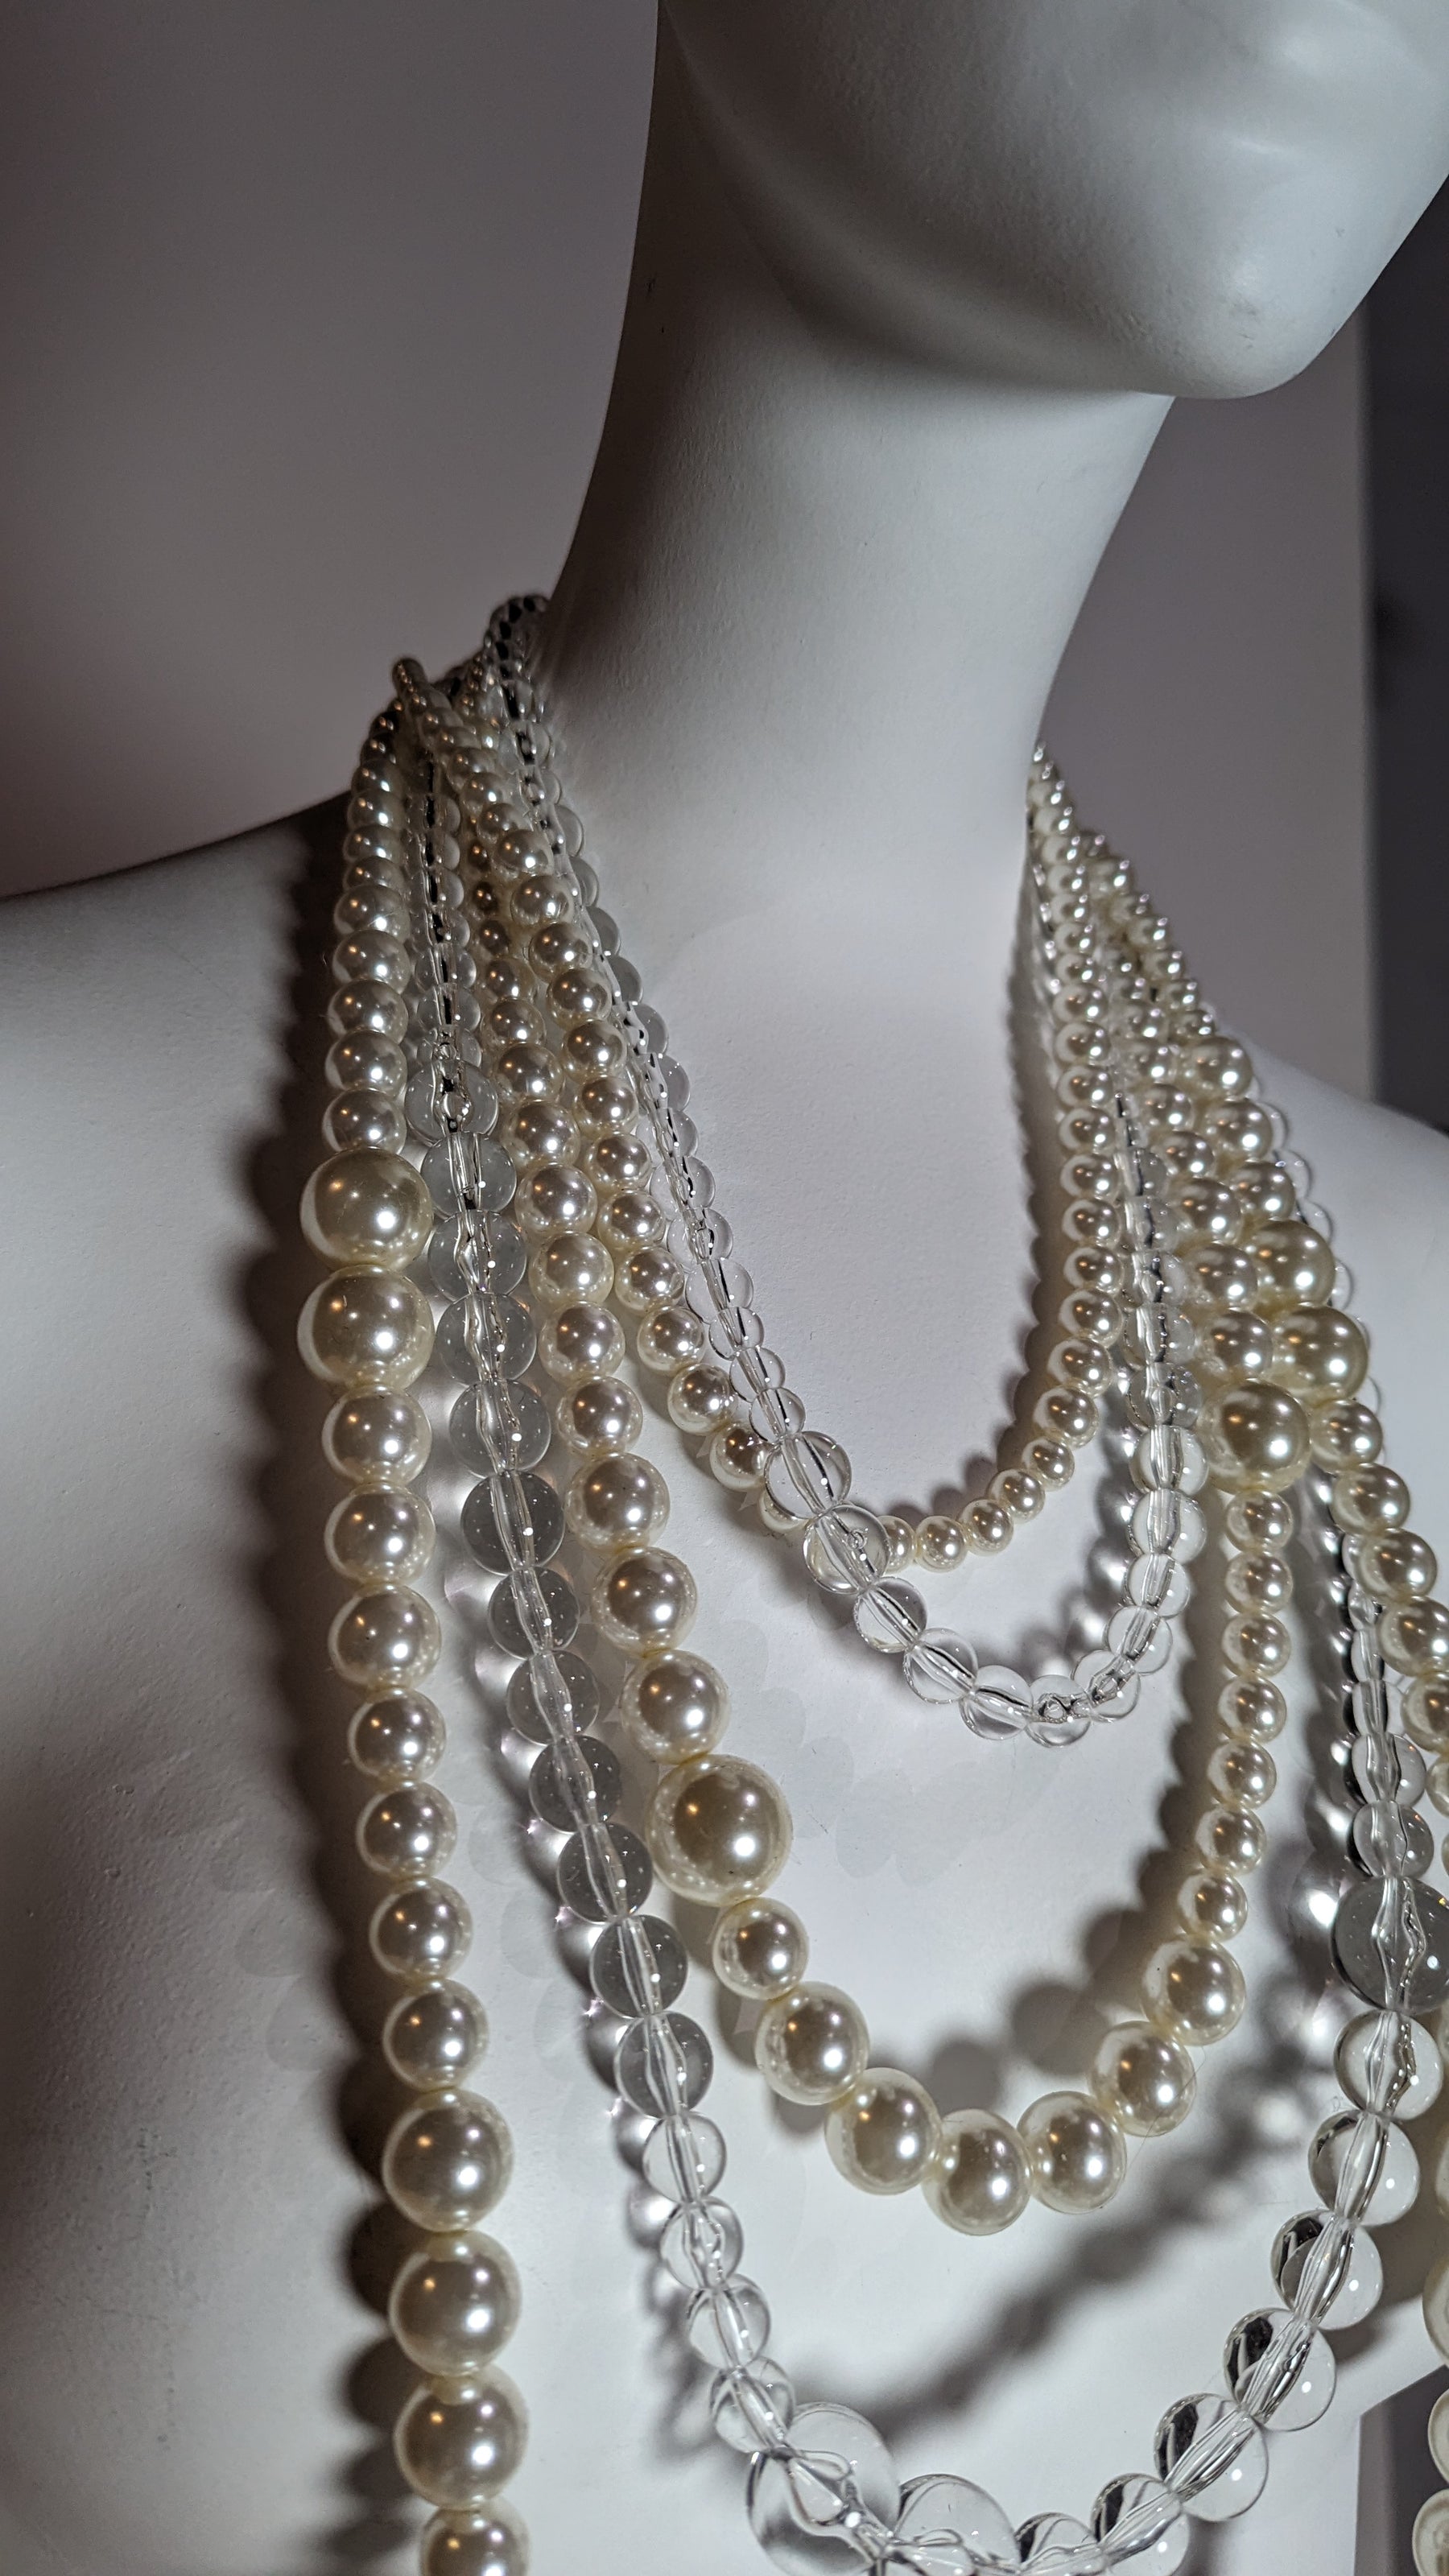 SAMPLE SALE - Fake Pearl Necklace - FINAL SALE